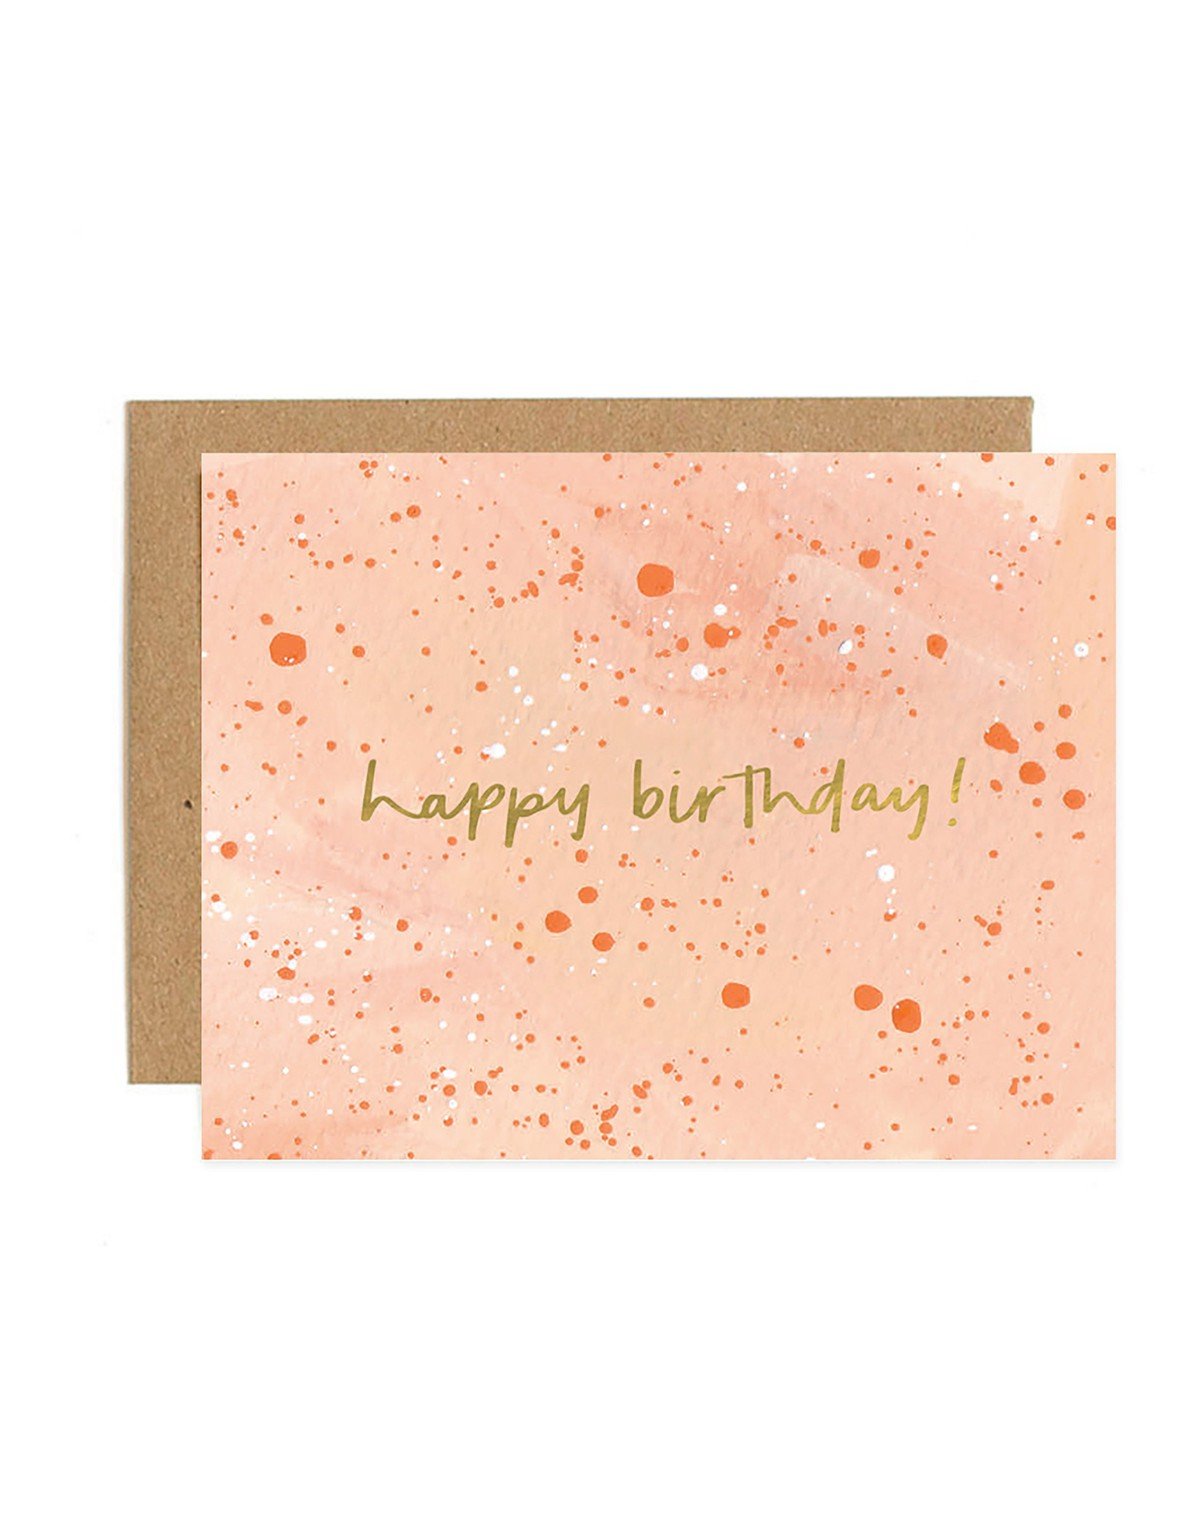 Speckled Zinnia Birthday Greeting Card item